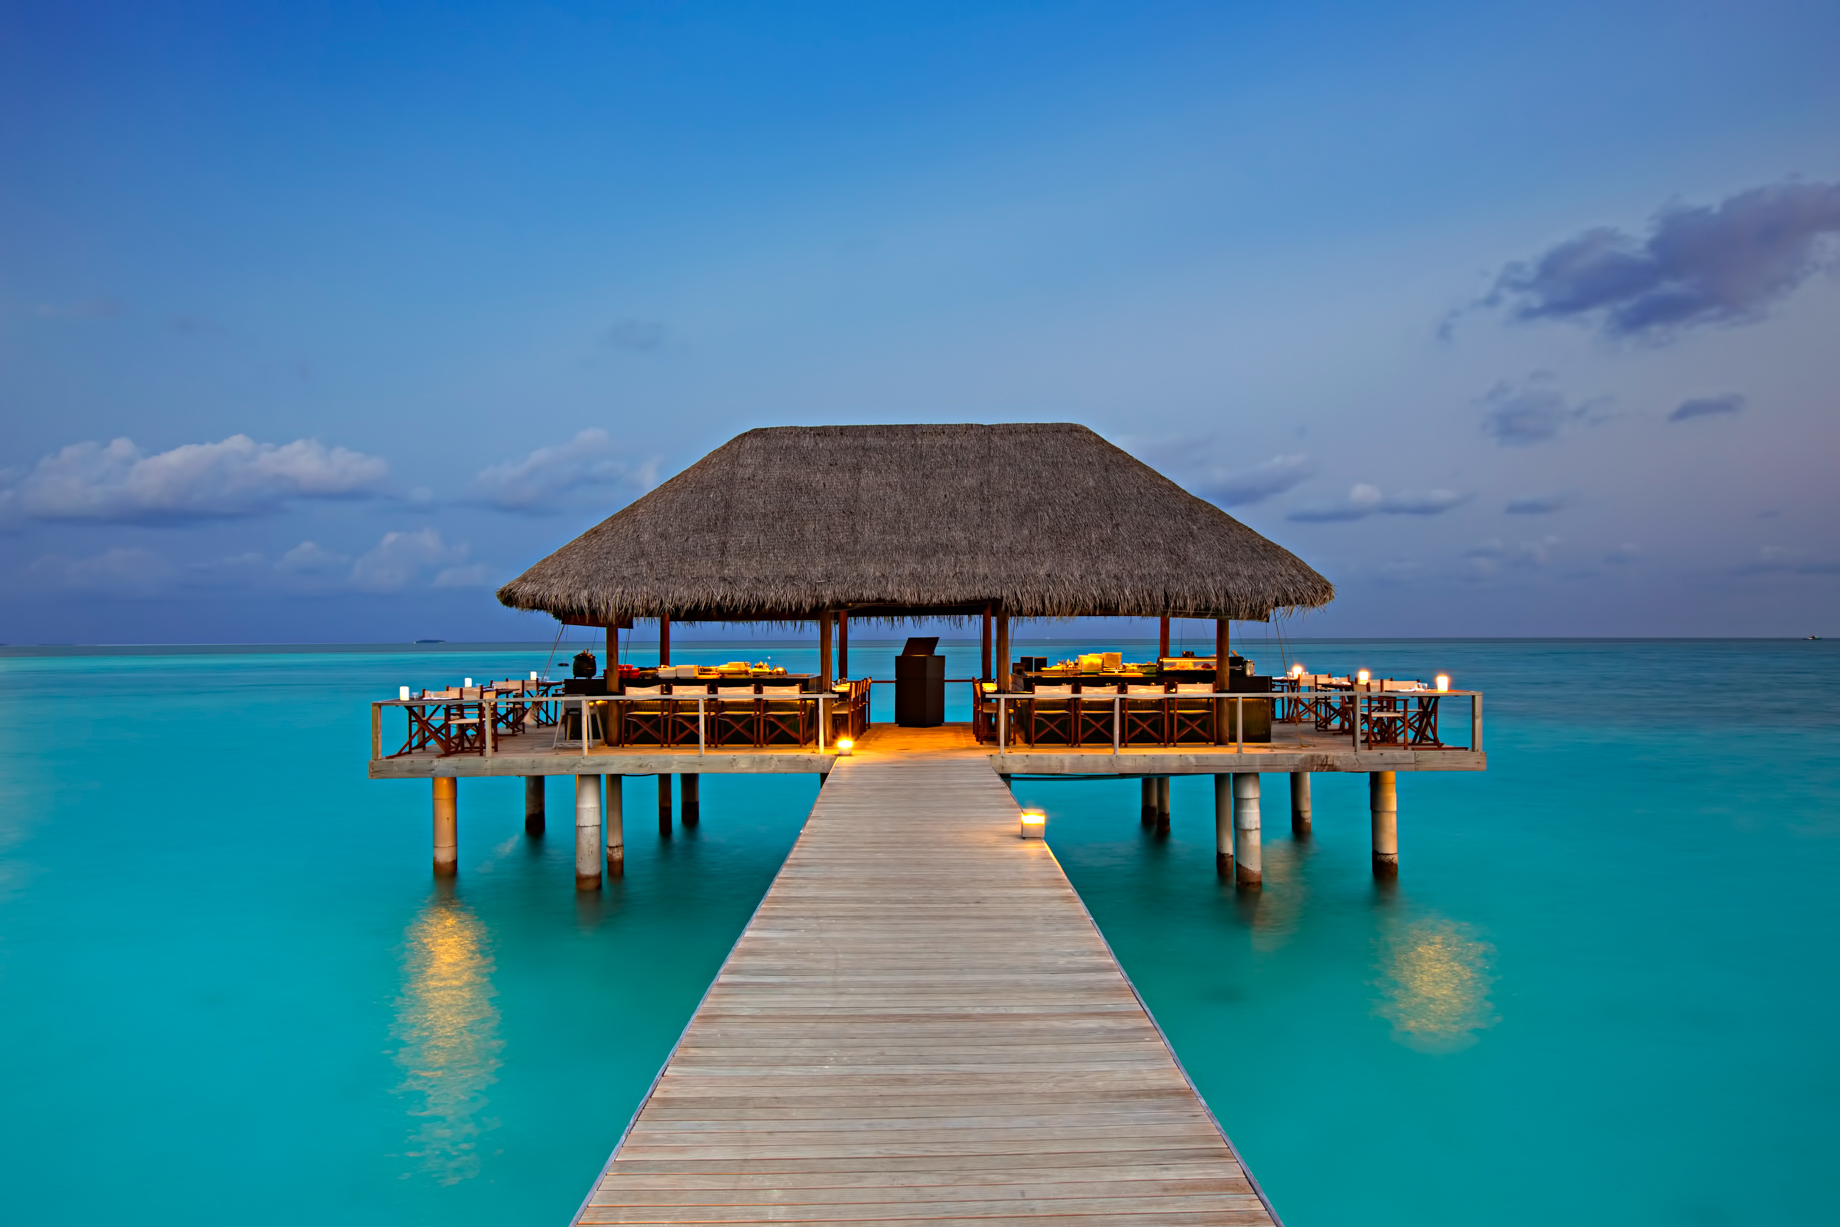 Velassaru Maldives Resort – South Male Atoll, Maldives – Overwater Restaurant Sunset